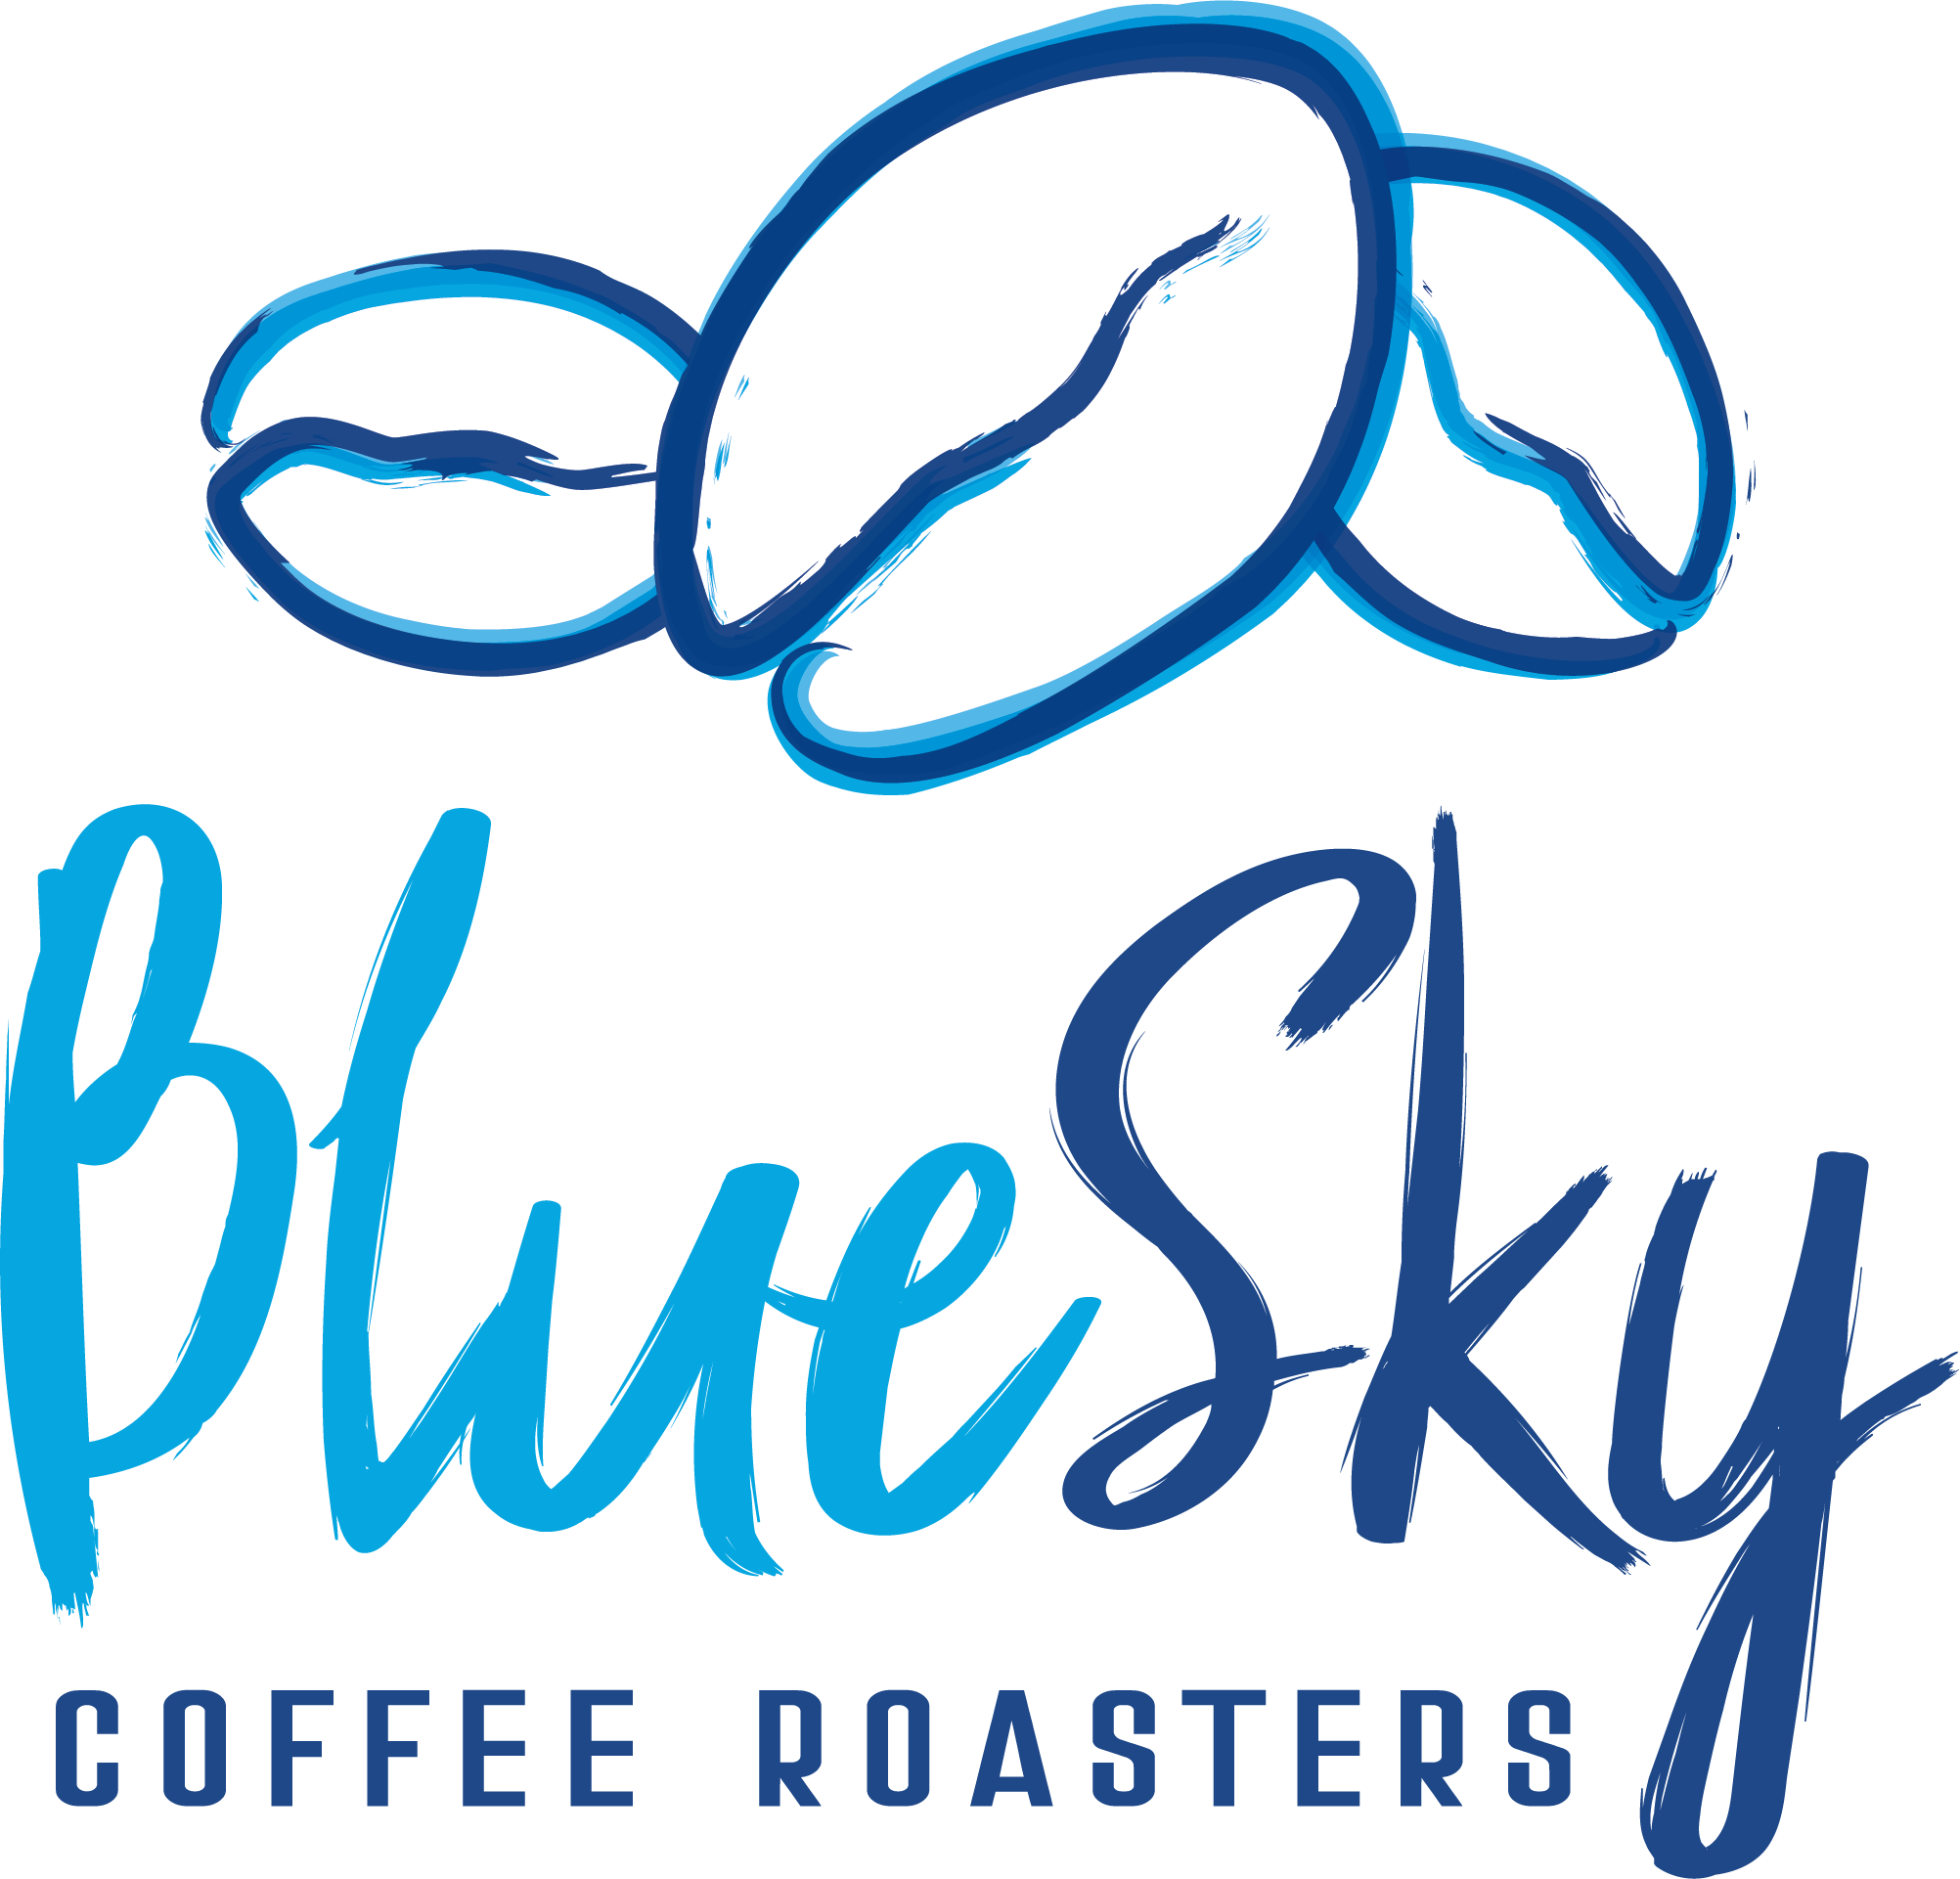 Blue Coffee Roasters